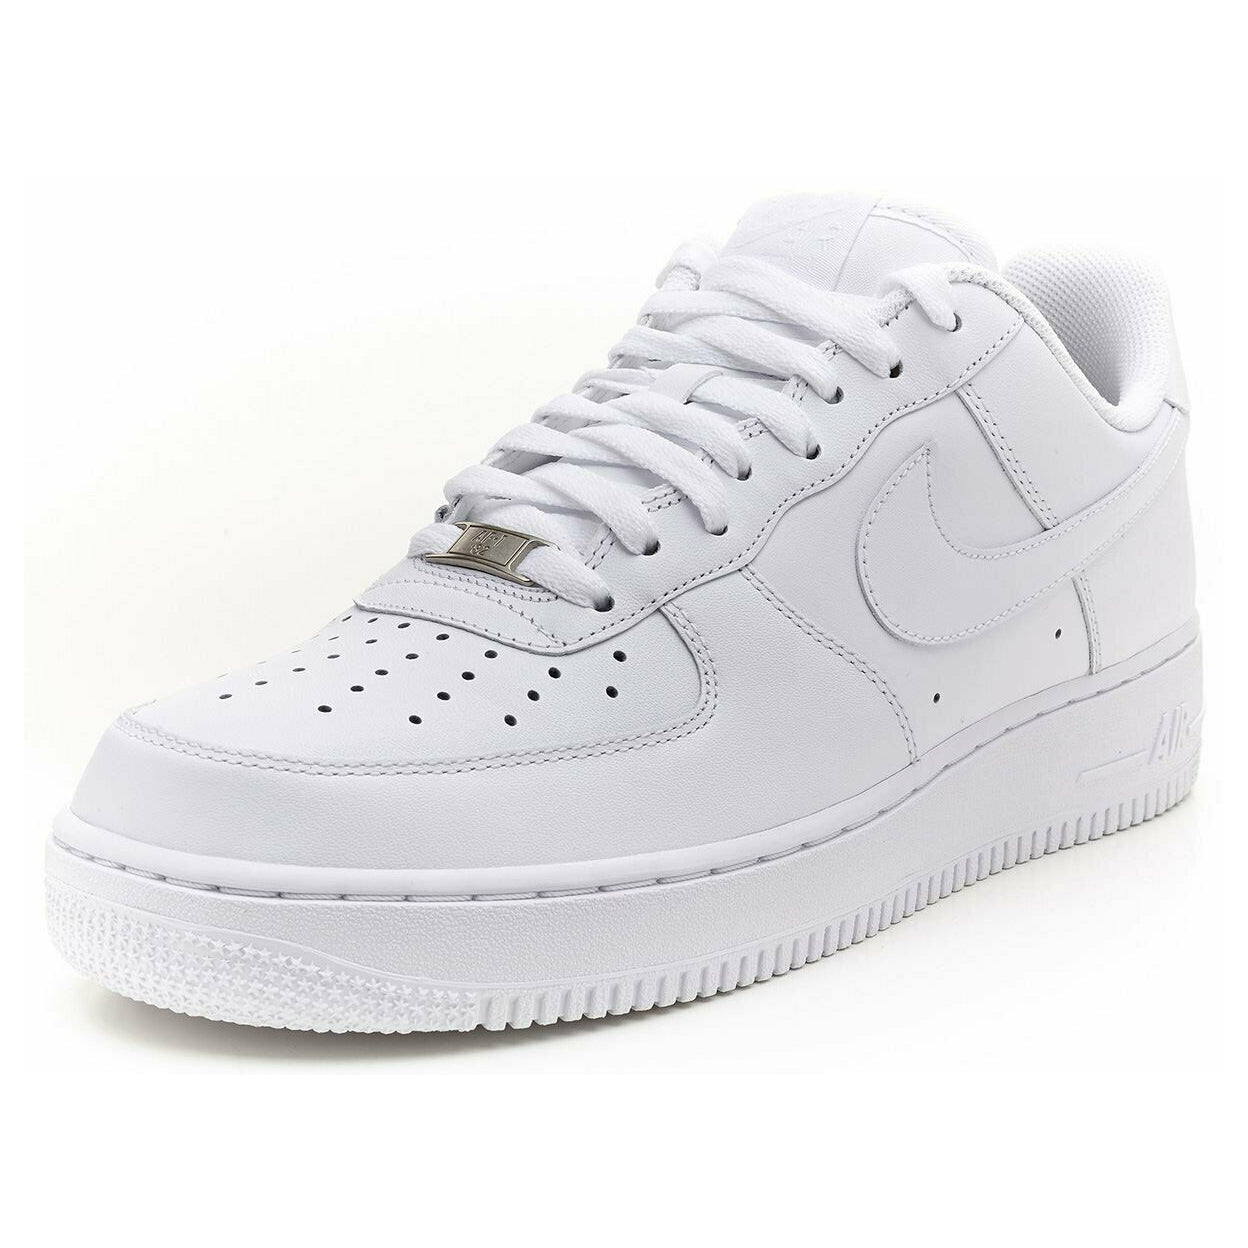 Nike Force 1 07 Men's Shoes White/White (315122-111) SIZE 13 Rafaelos